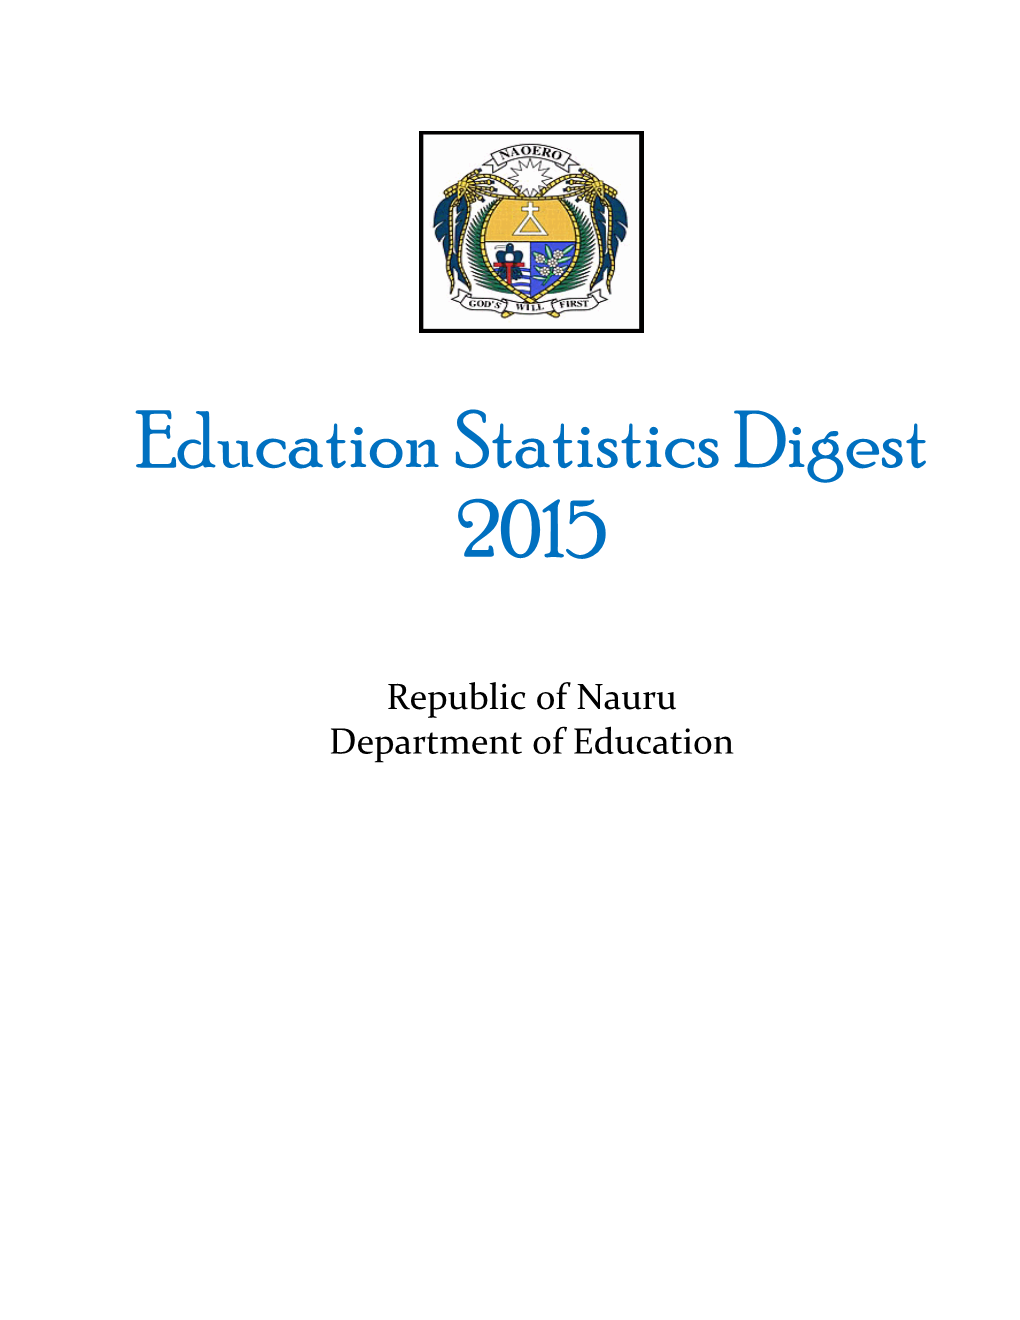 Education Statistics Digest 2015